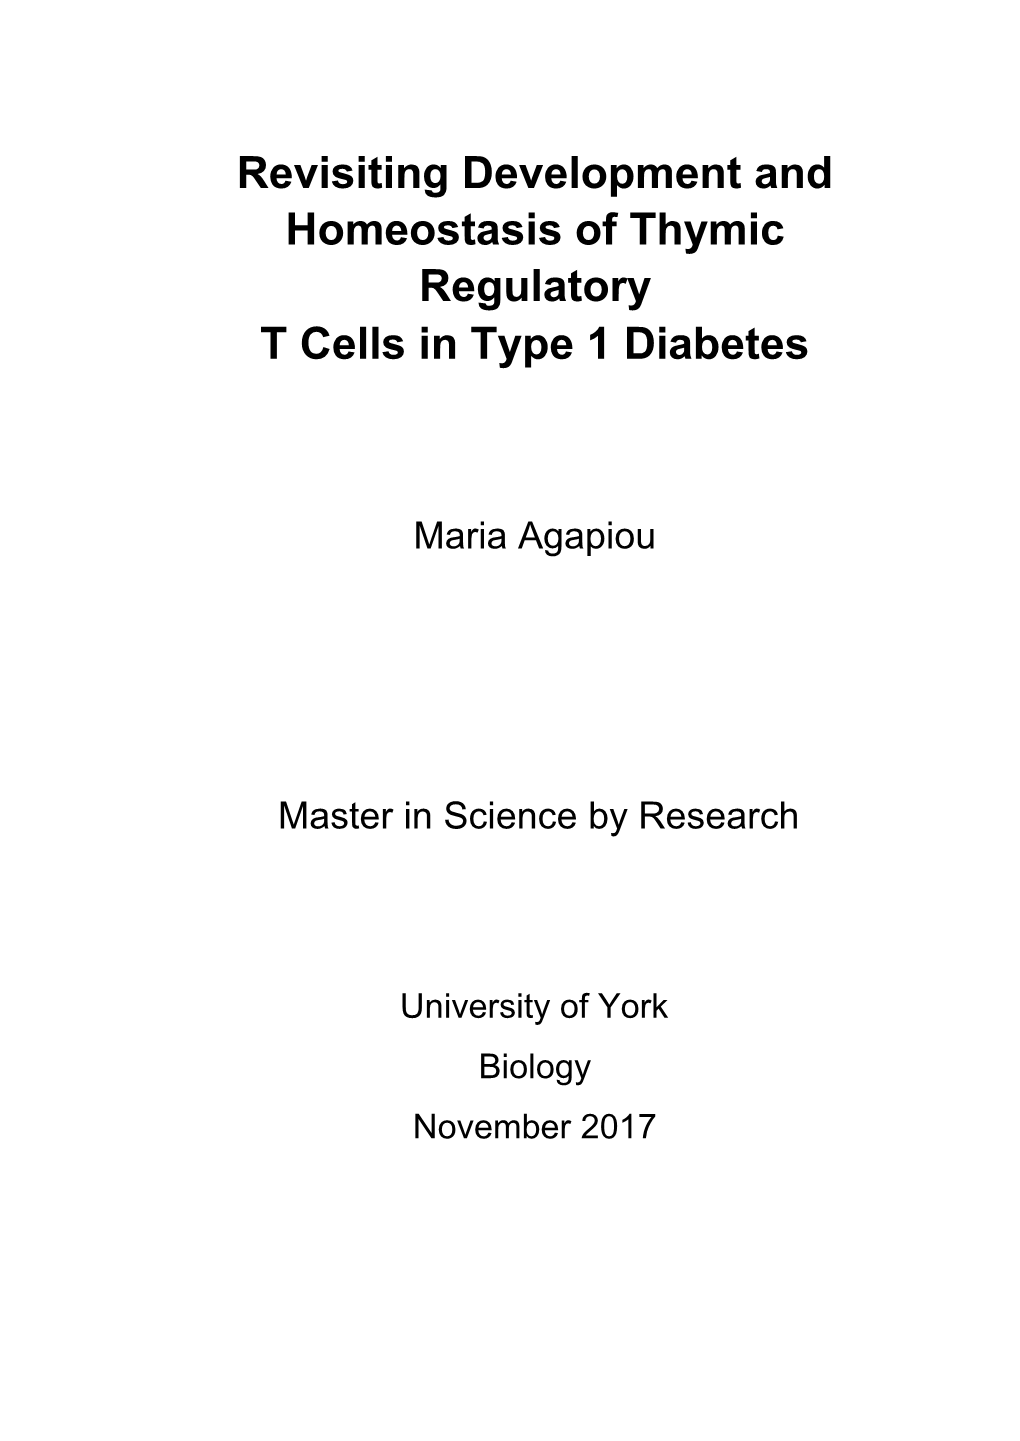 Revisiting Development and Homeostasis of Thymic Regulatory